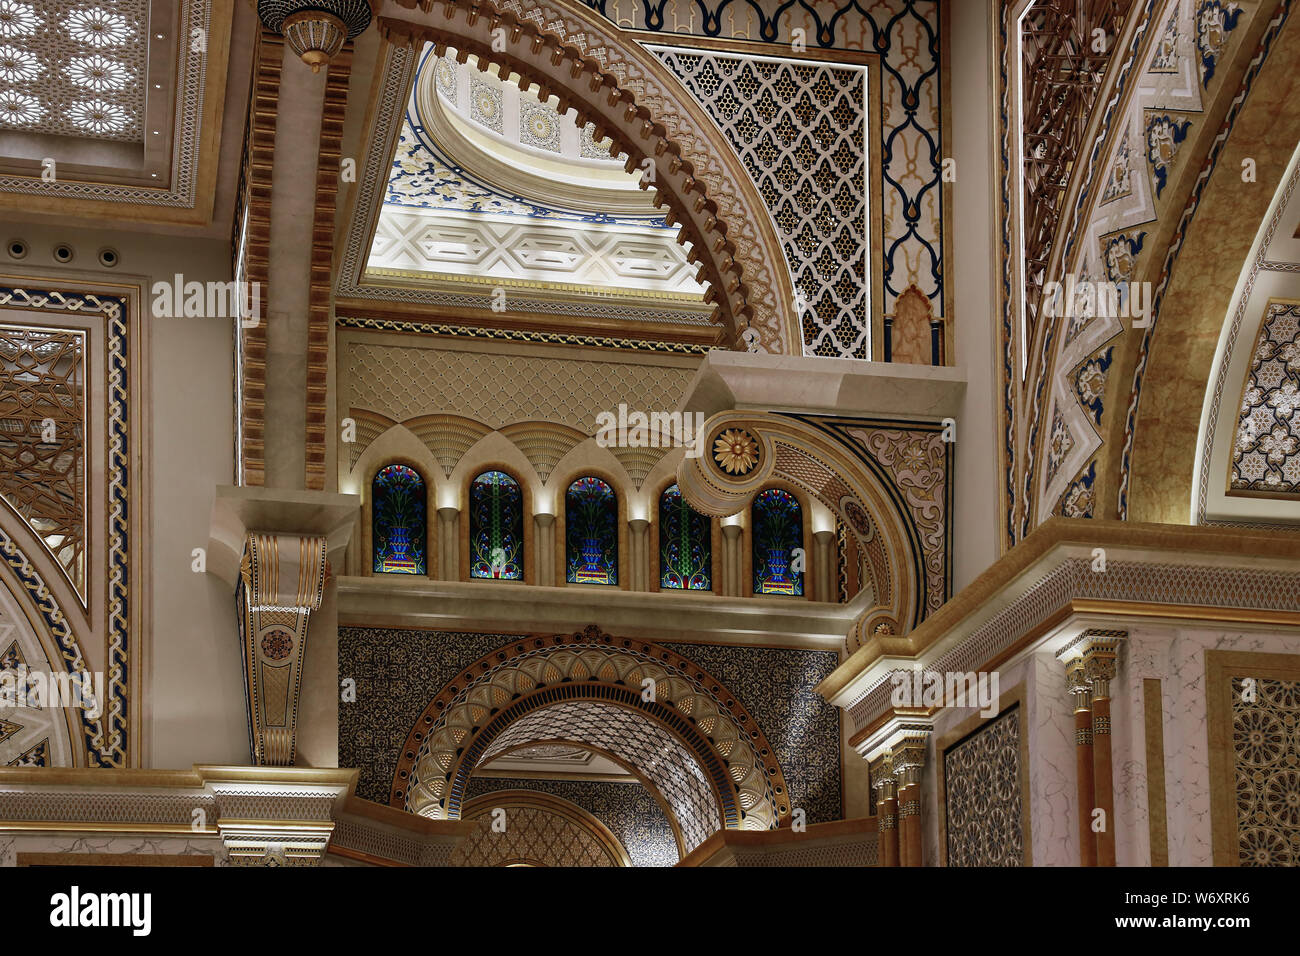 Qasr Al Watan [Palace of the Nation] Abu Dhabi - Interior architectural detail Stock Photo